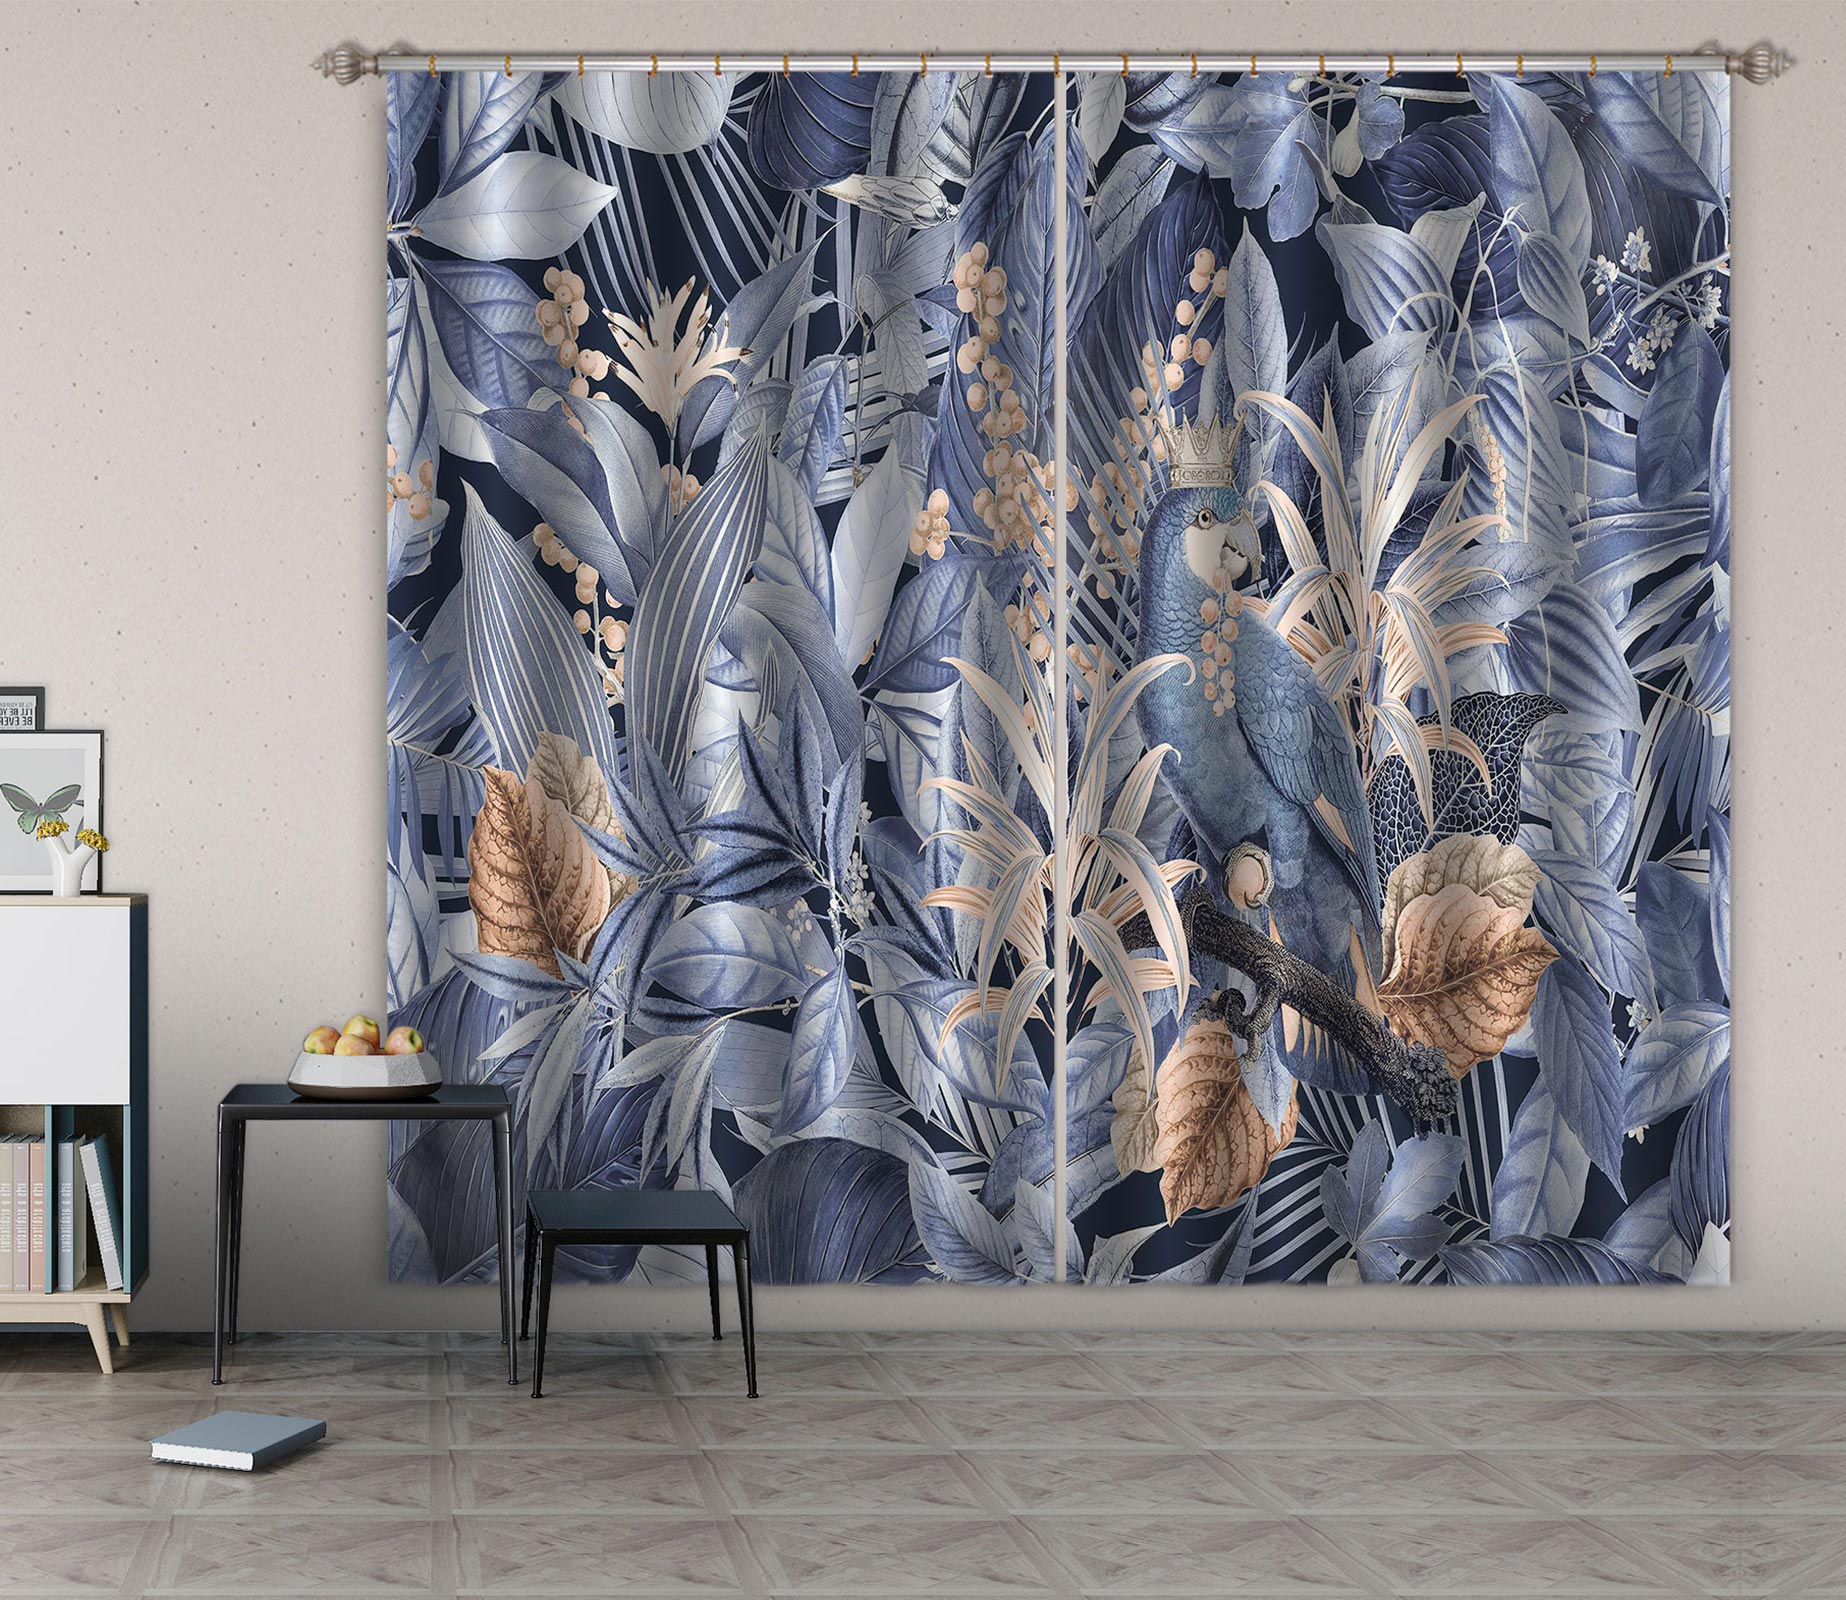 3D Parrot Plant 005 Andrea haase Curtain Curtains Drapes